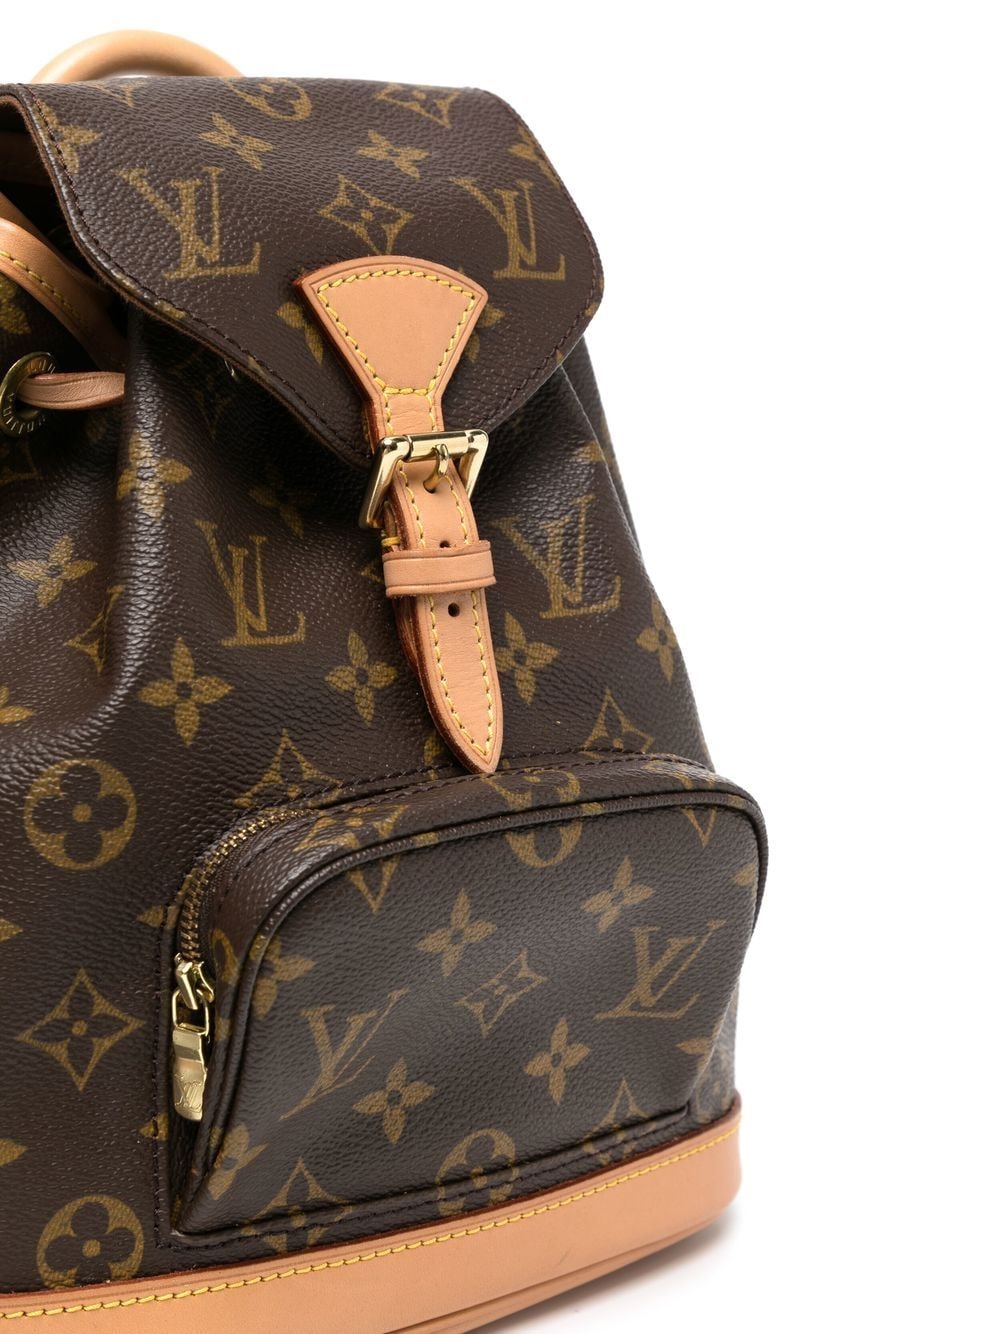 Louis Vuitton 1997 pre-owned Mini Montsouris Backpack - Farfetch